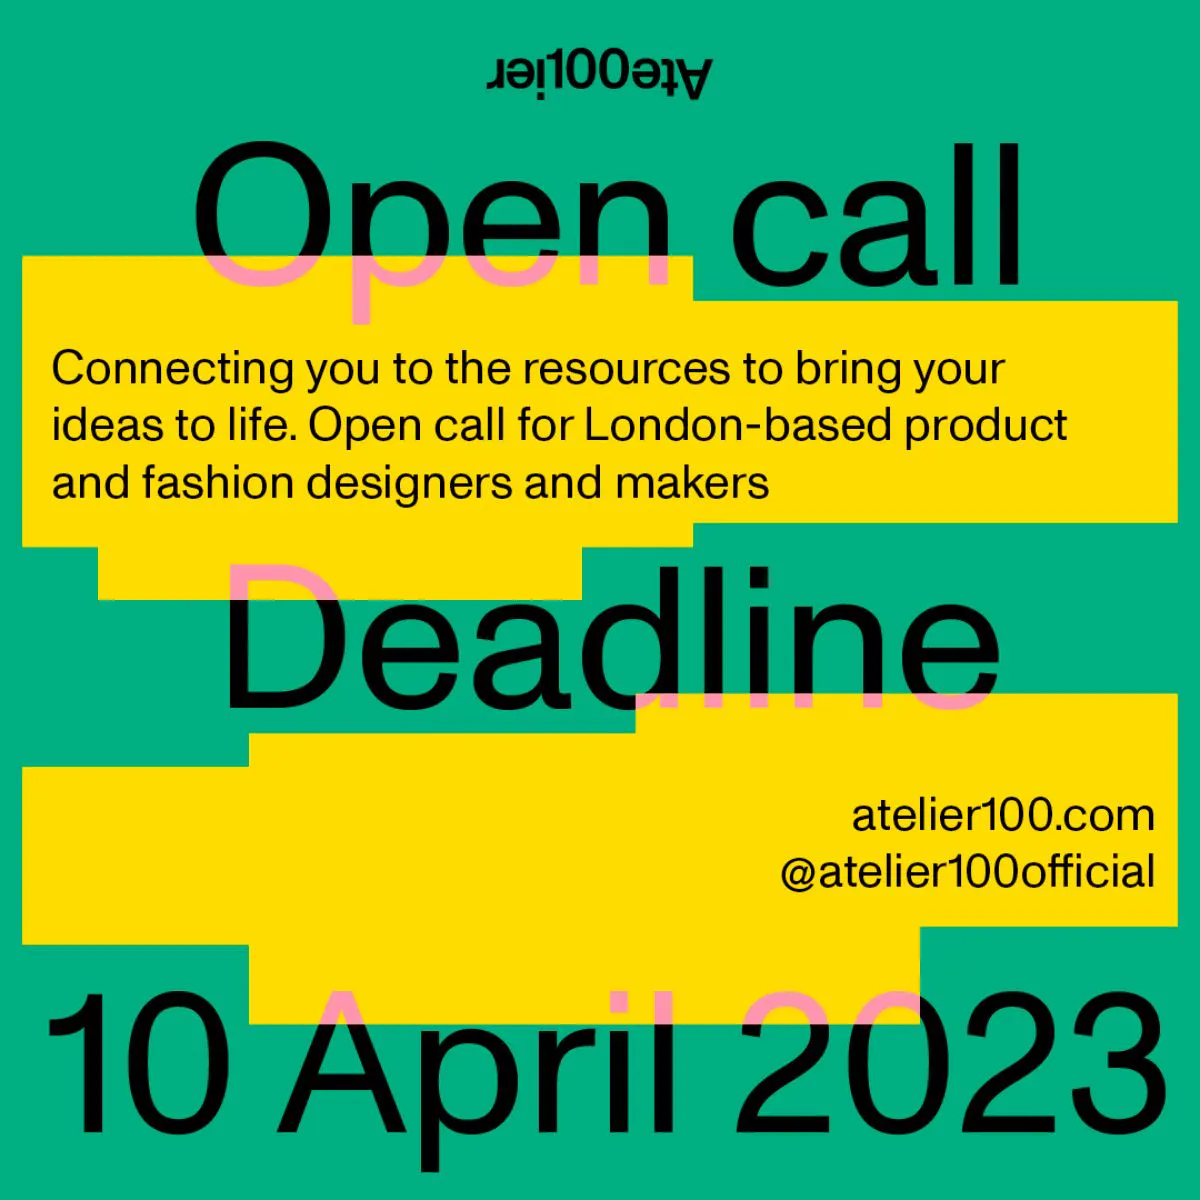 Open Call to apply for Atelier100 funding, deadline 10 April 2023.